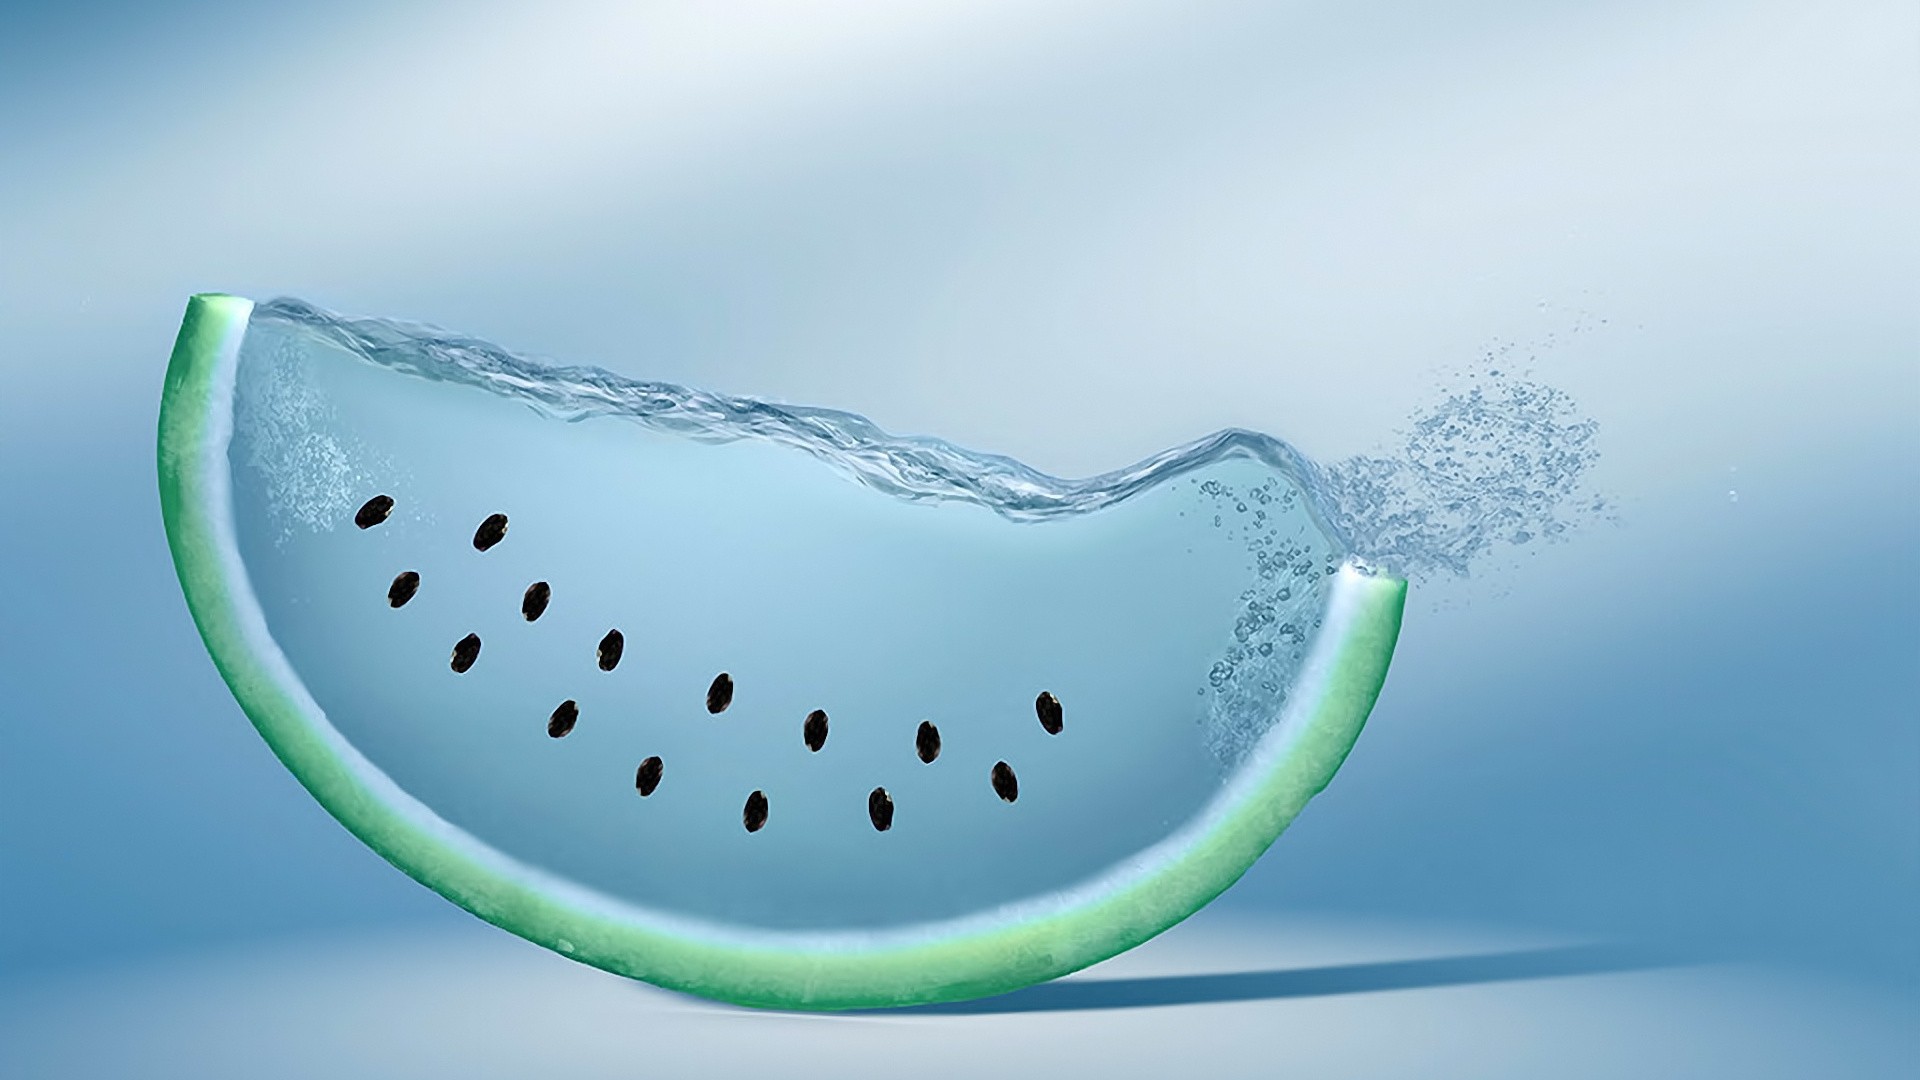 General 1920x1080 watermelons artwork digital art water fruit blue light blue splashes minimalism simple background